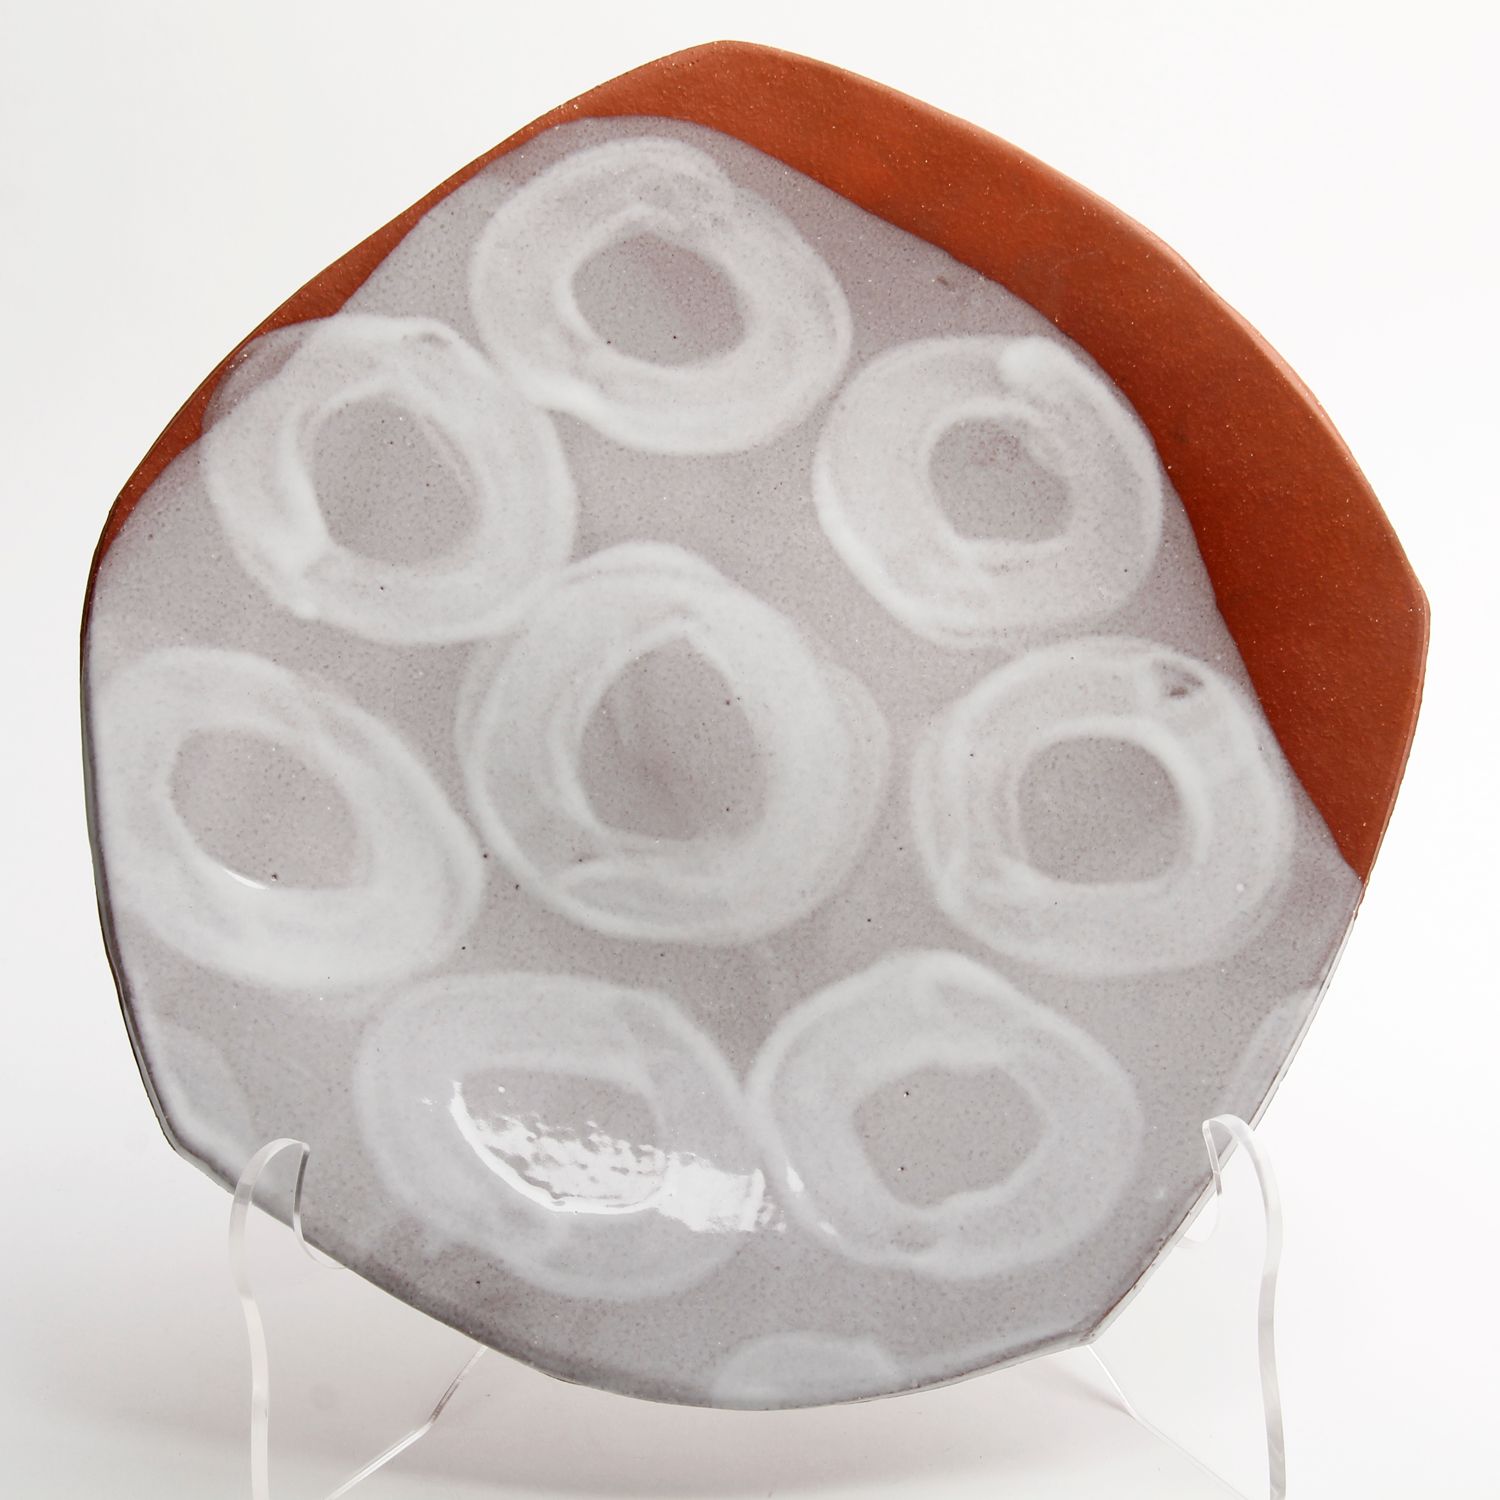 Mary McKenzie: Large White Circles Platter Product Image 1 of 2